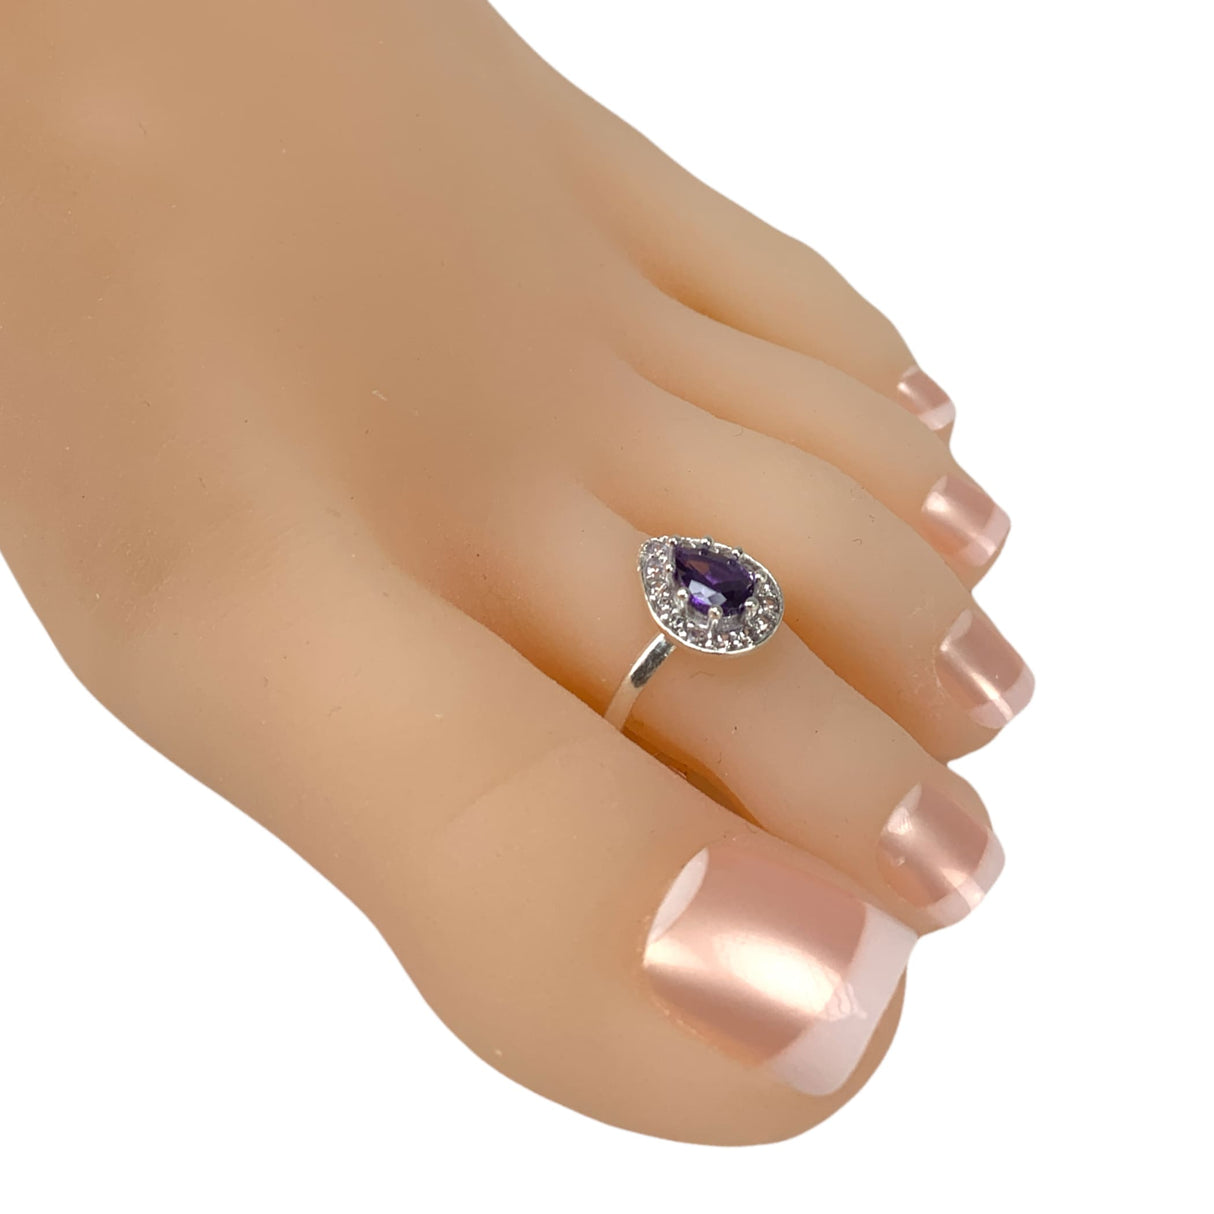 Adjustable silver toe rings pair solid indian bichiya real